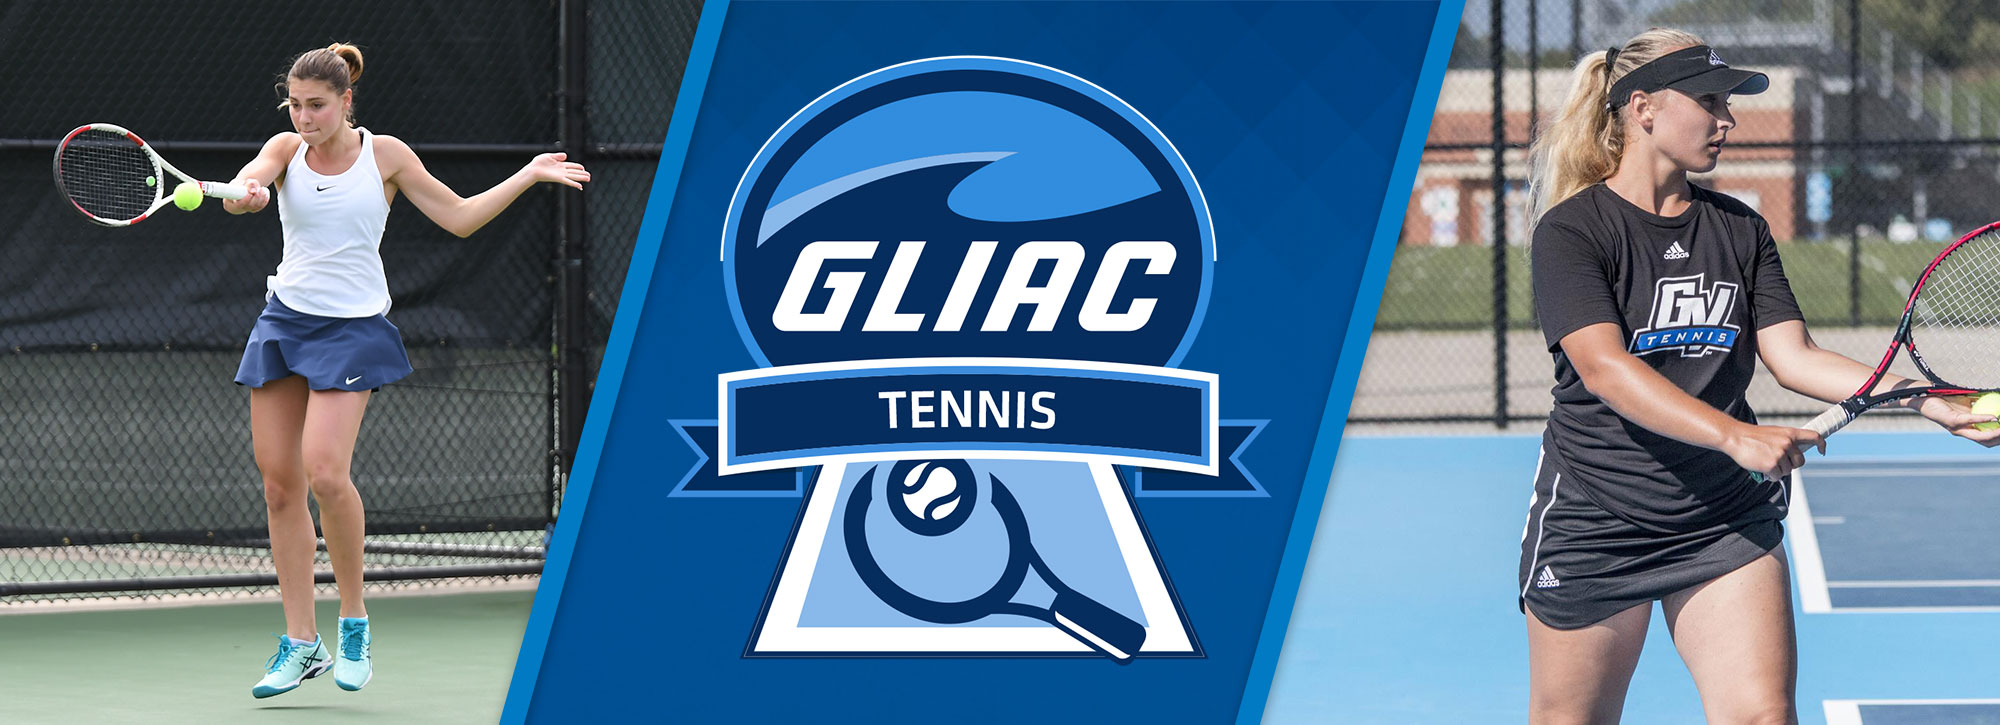 2018 GLIAC Women's Tennis Tournament Begins Friday in Midland; Grand Valley State & Northwood Share Title